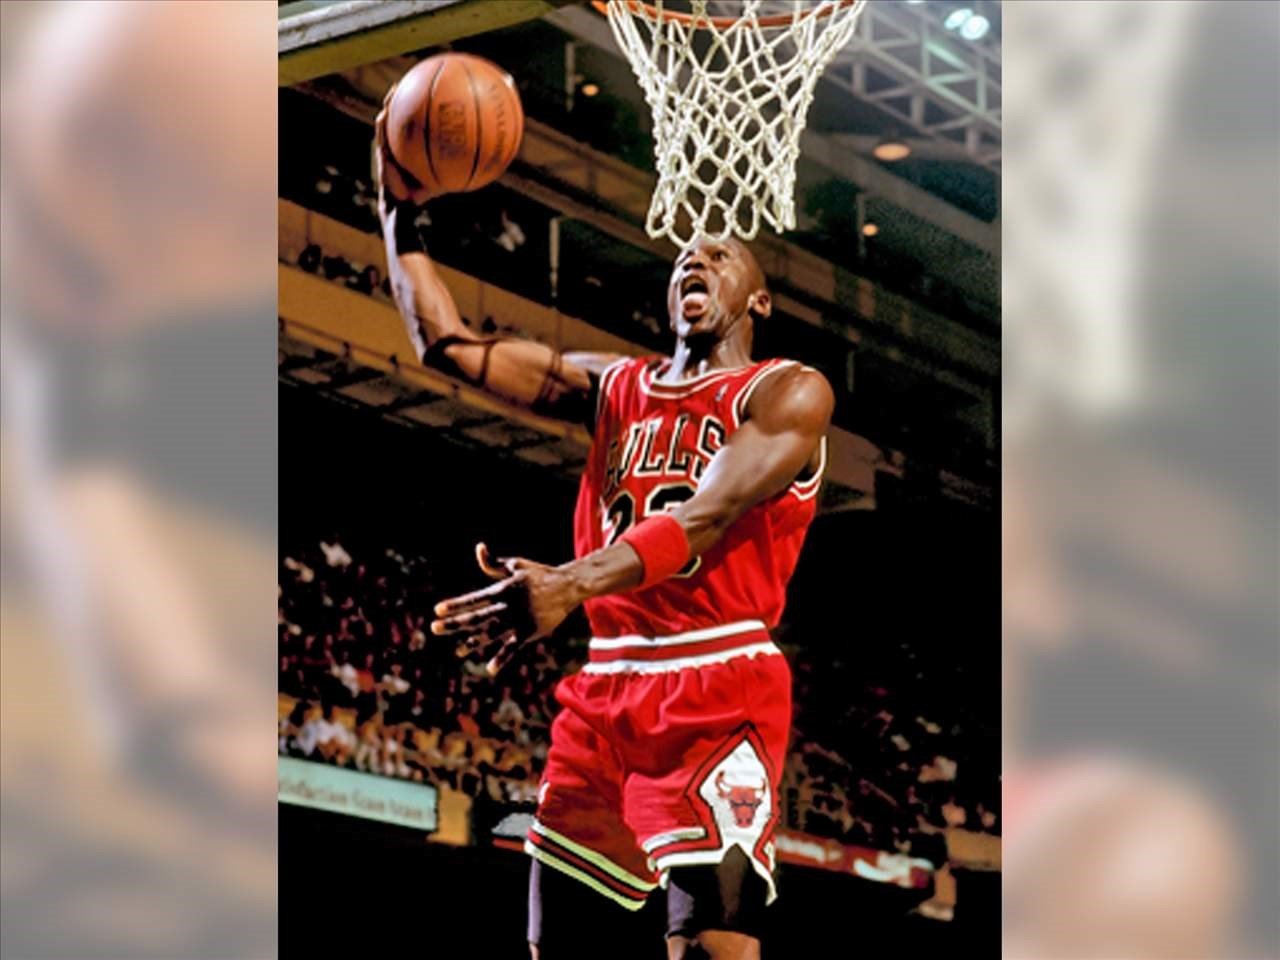 Michael Jordan: Winning 6th NBA title with Bulls was “trying year